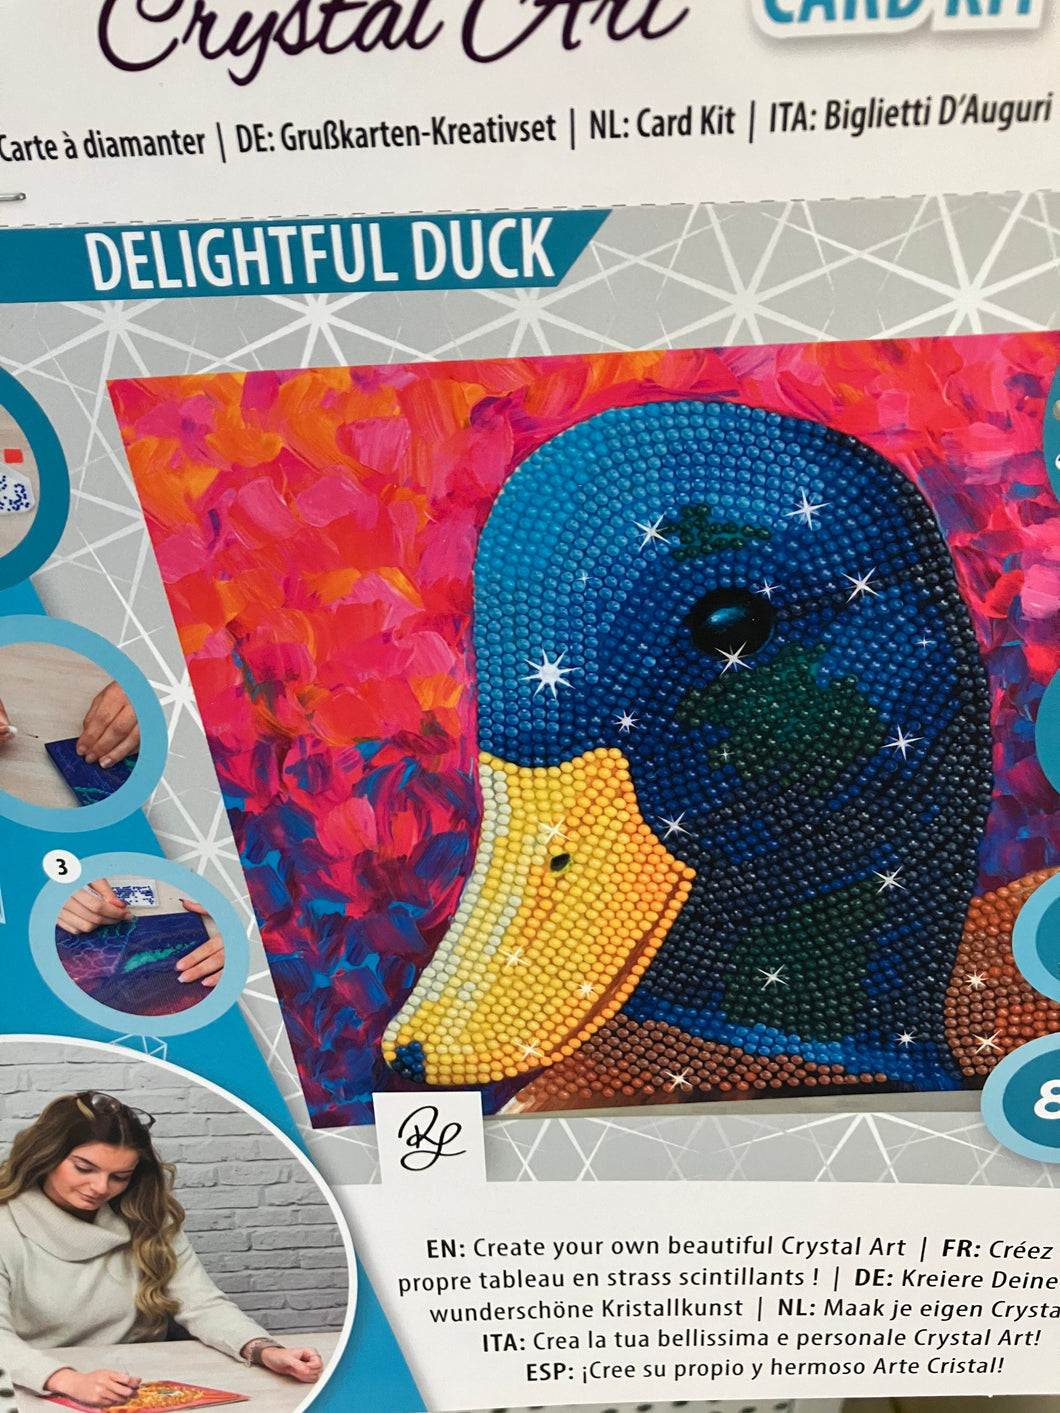 Crystal Art card kit - Delightful Duck